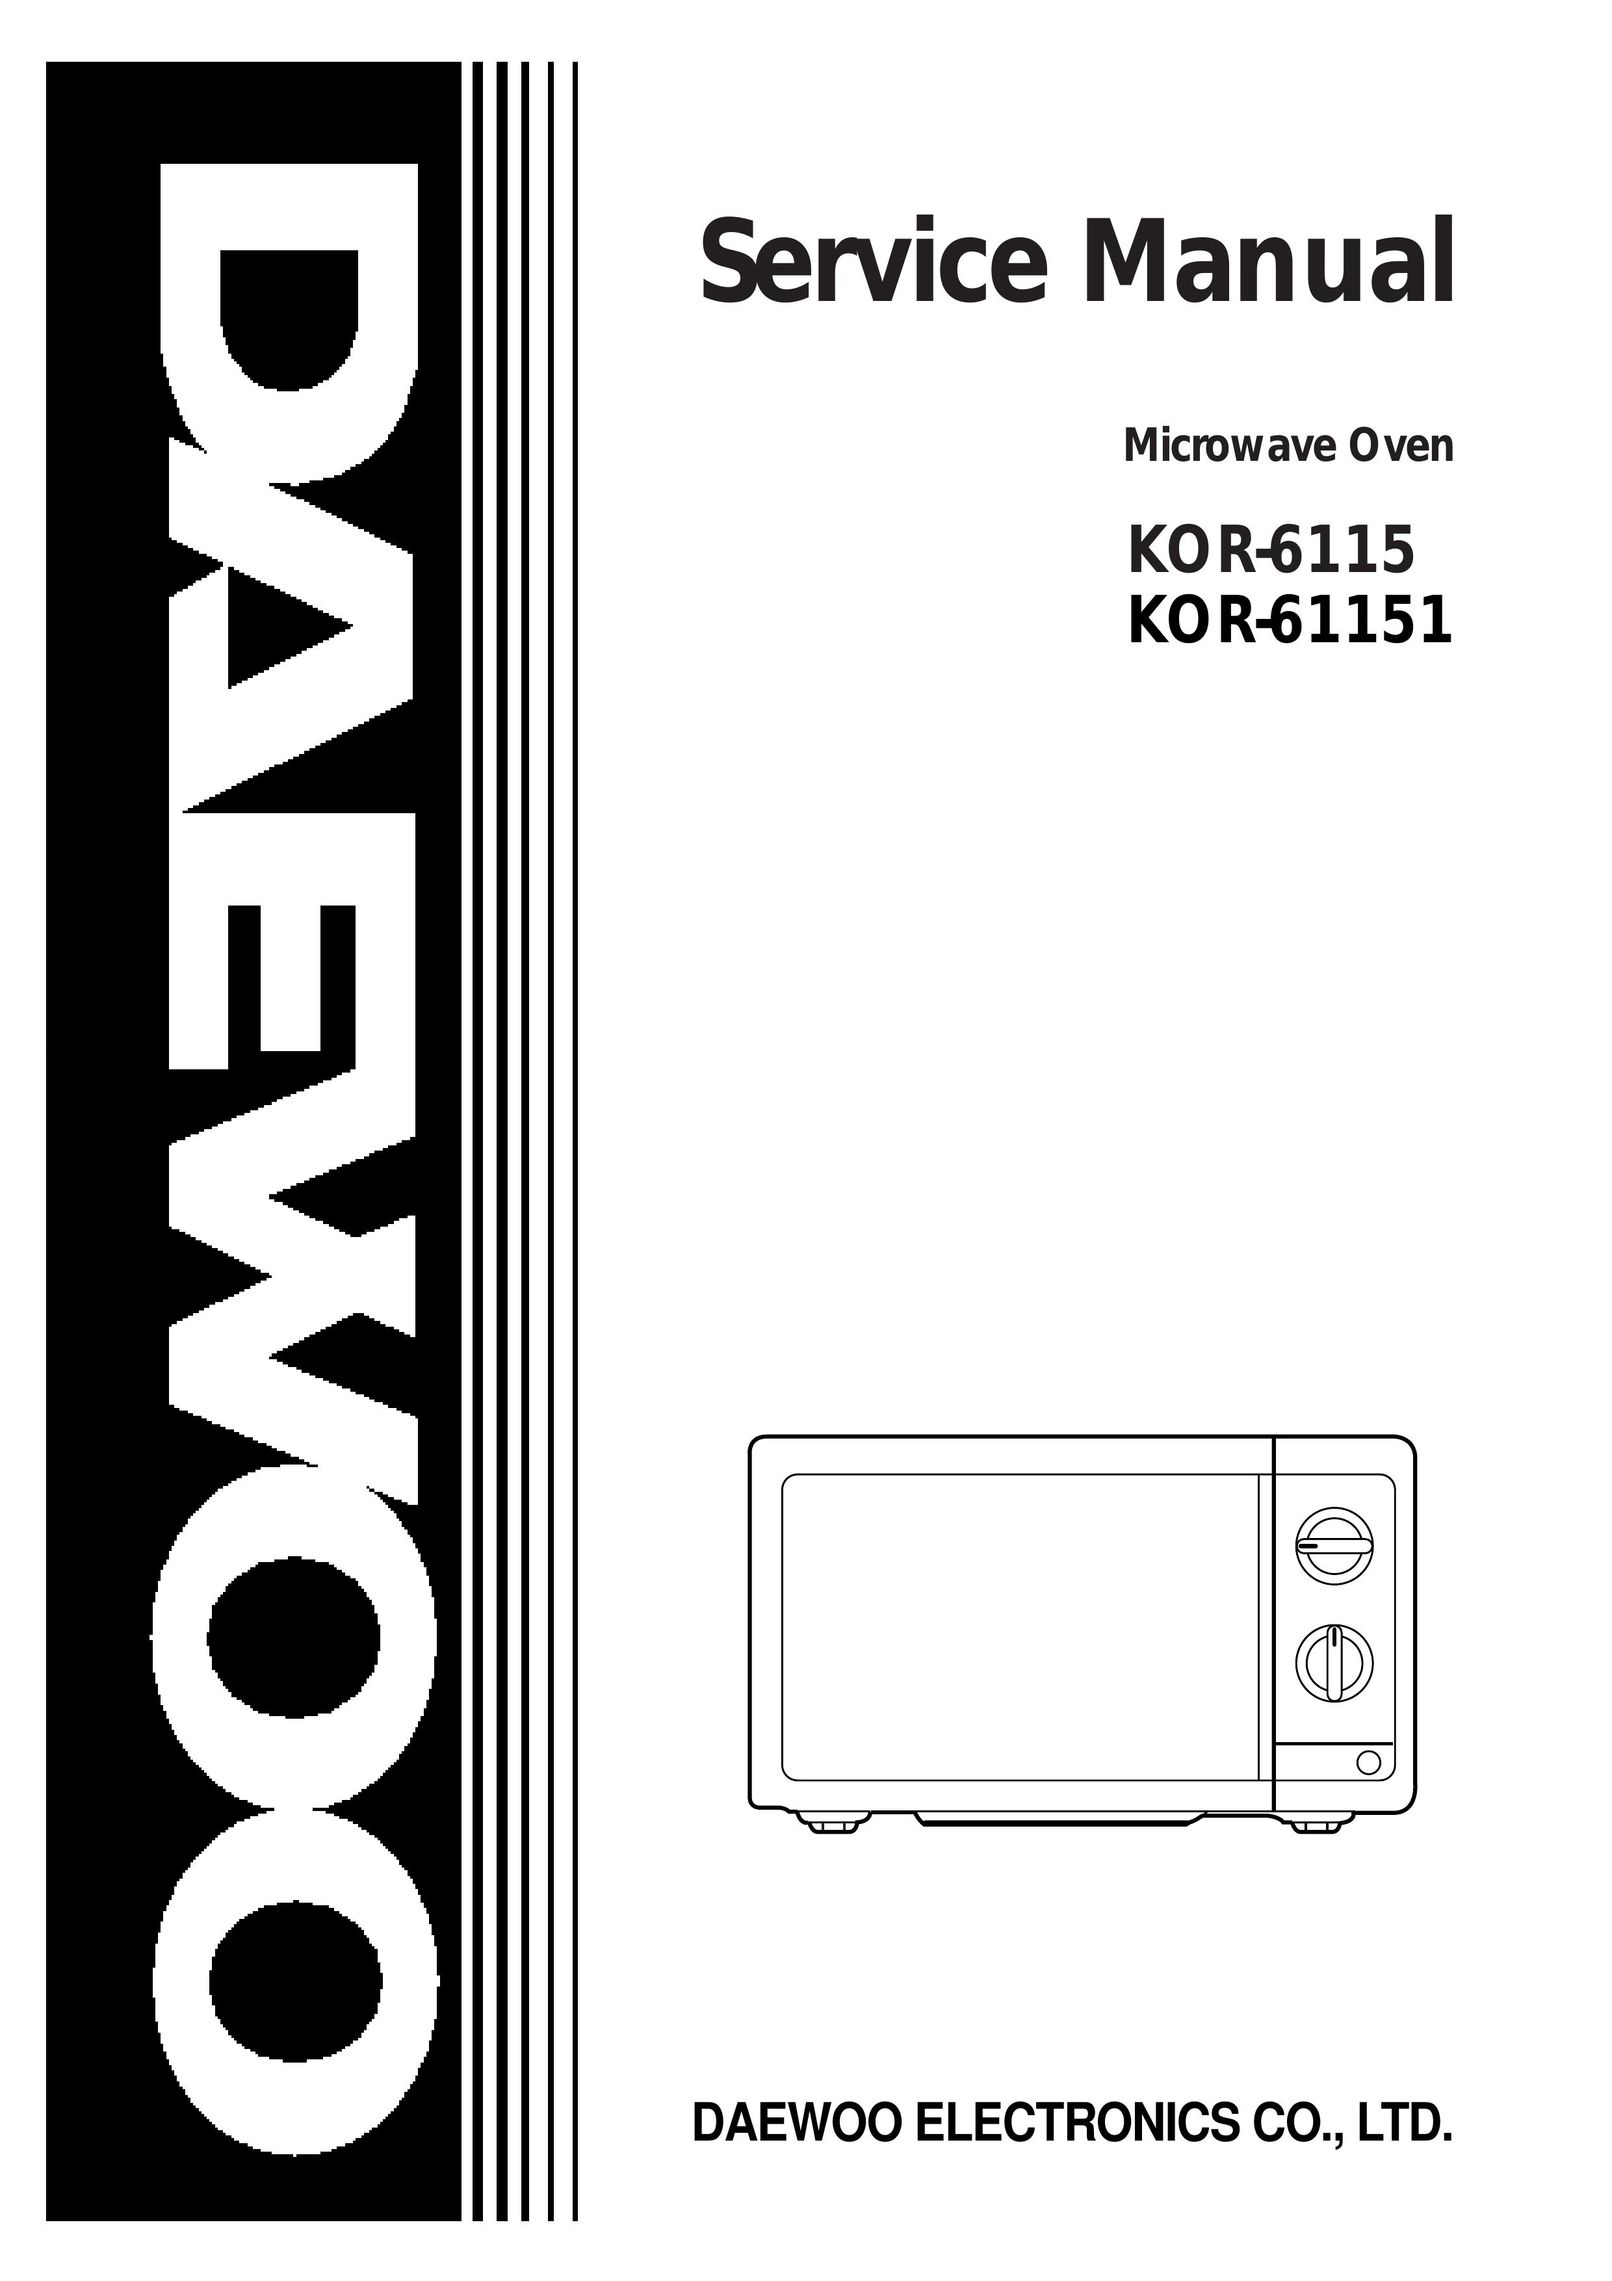 Daewoo KOR-61151 Microwave Oven User Manual